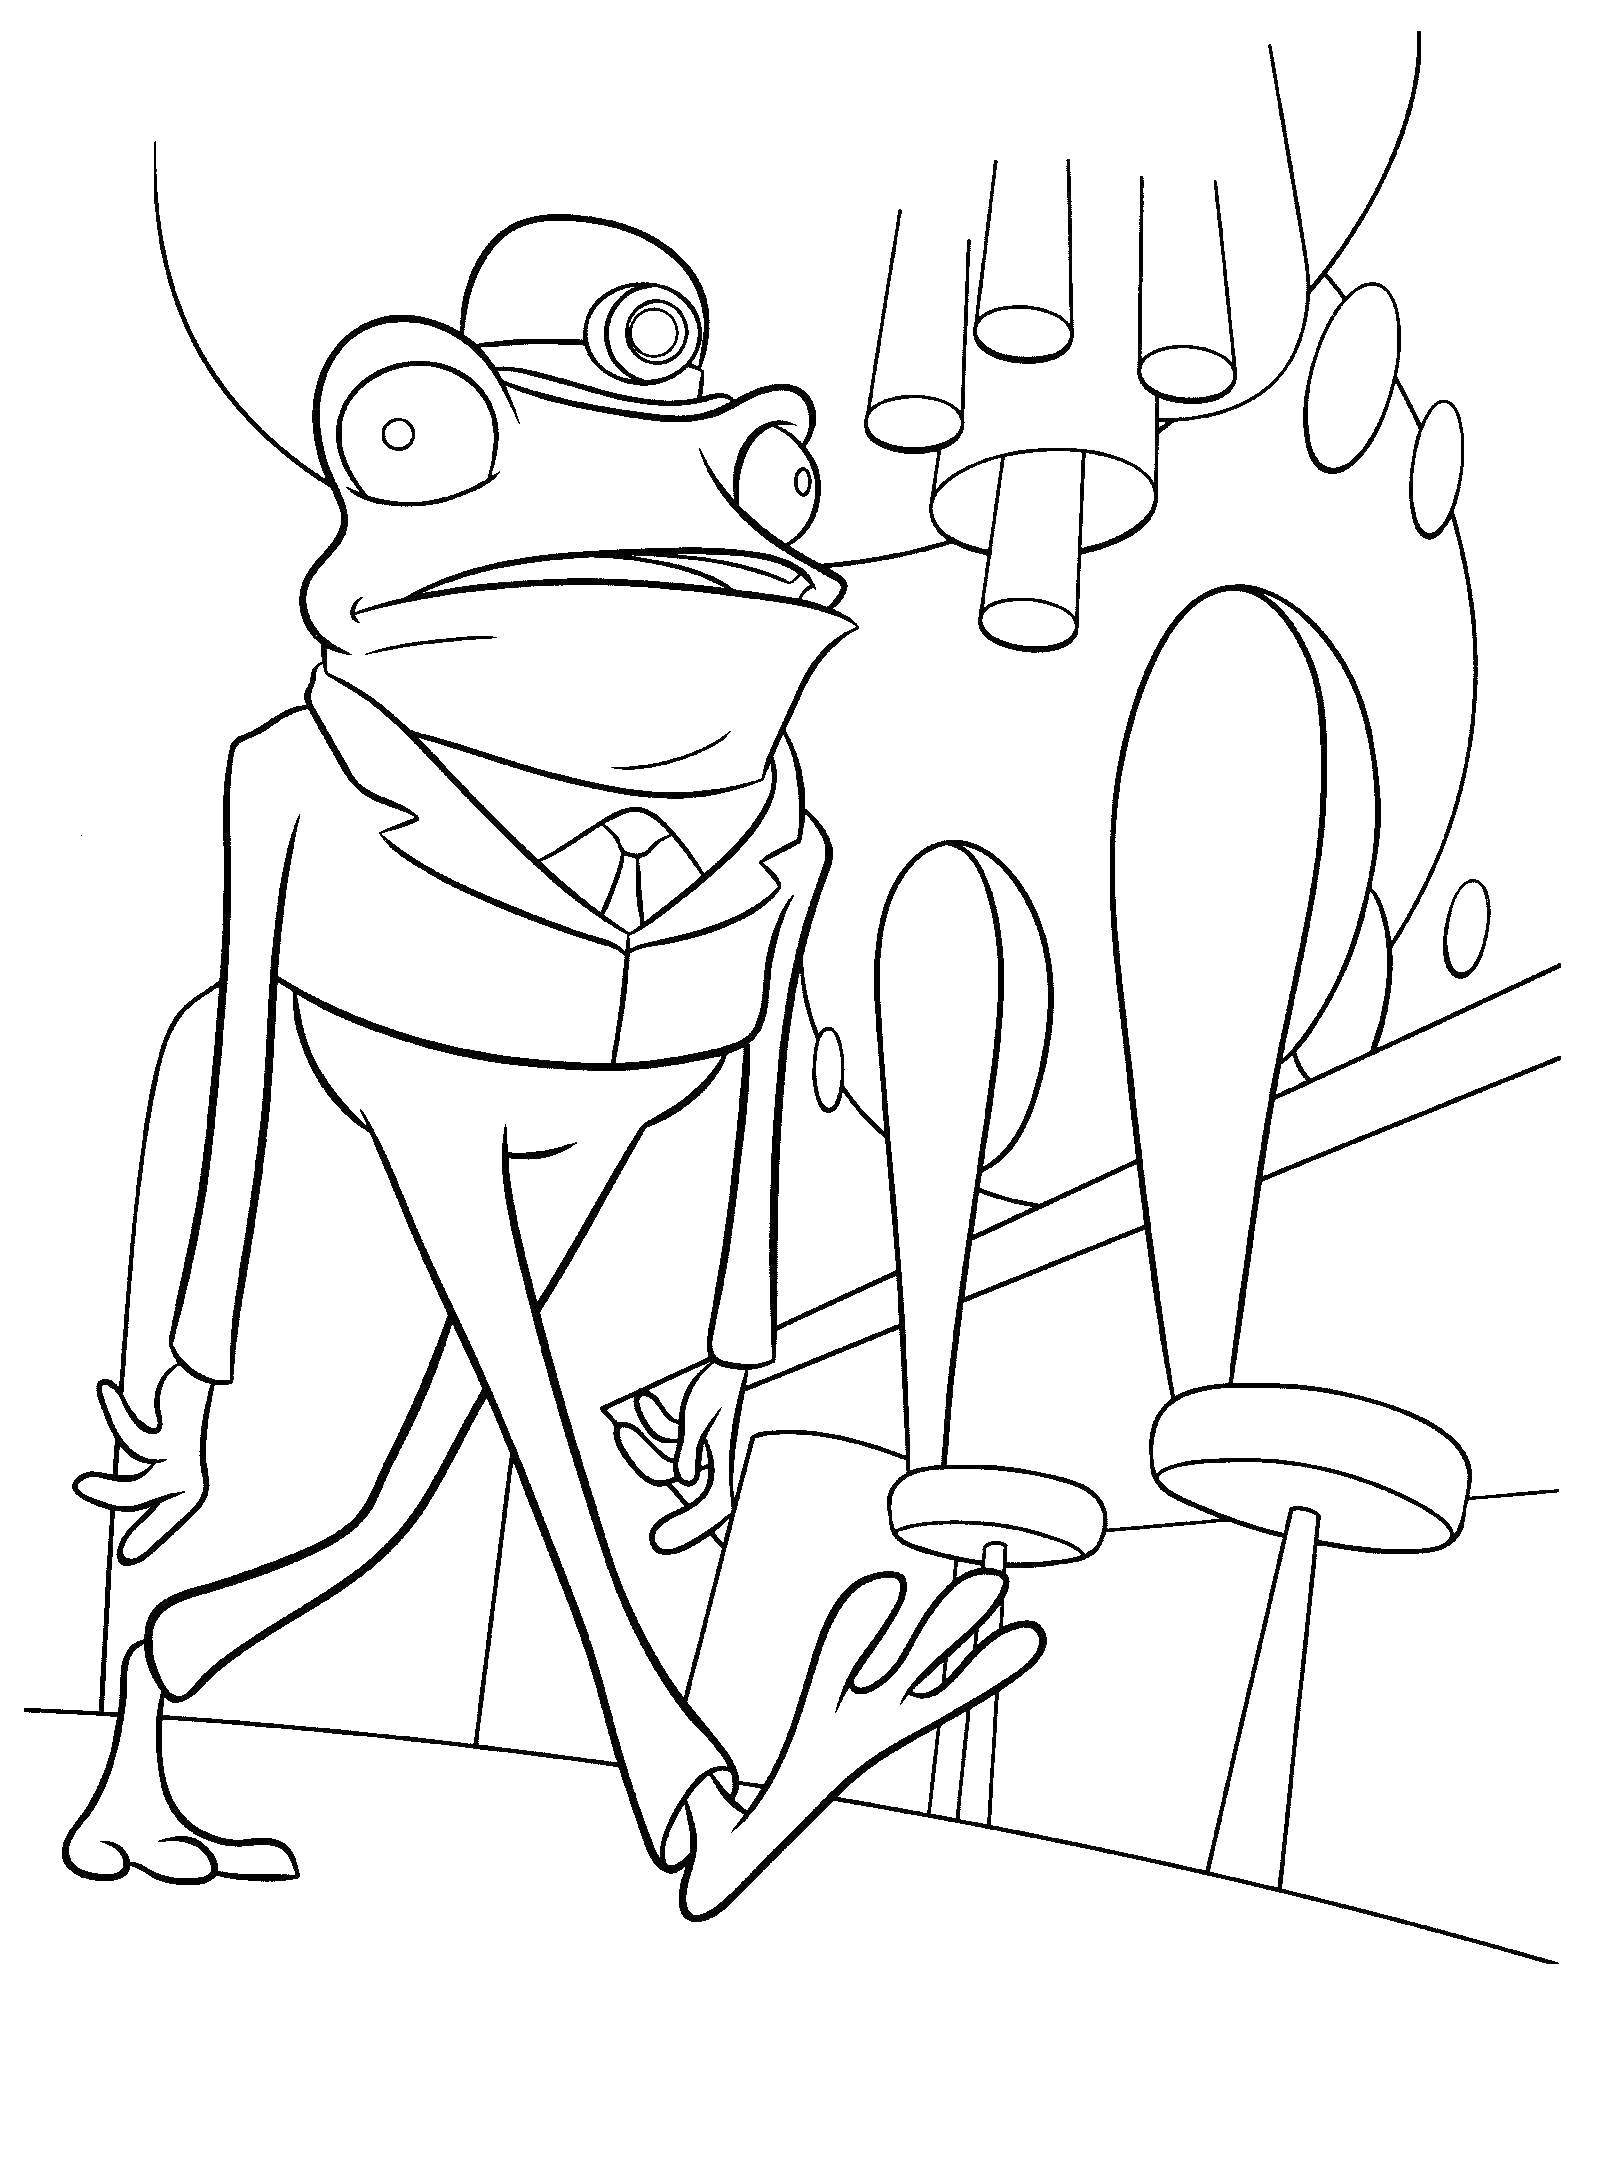 Coloring Frog. Category Cartoon character. Tags:  Cartoon character.